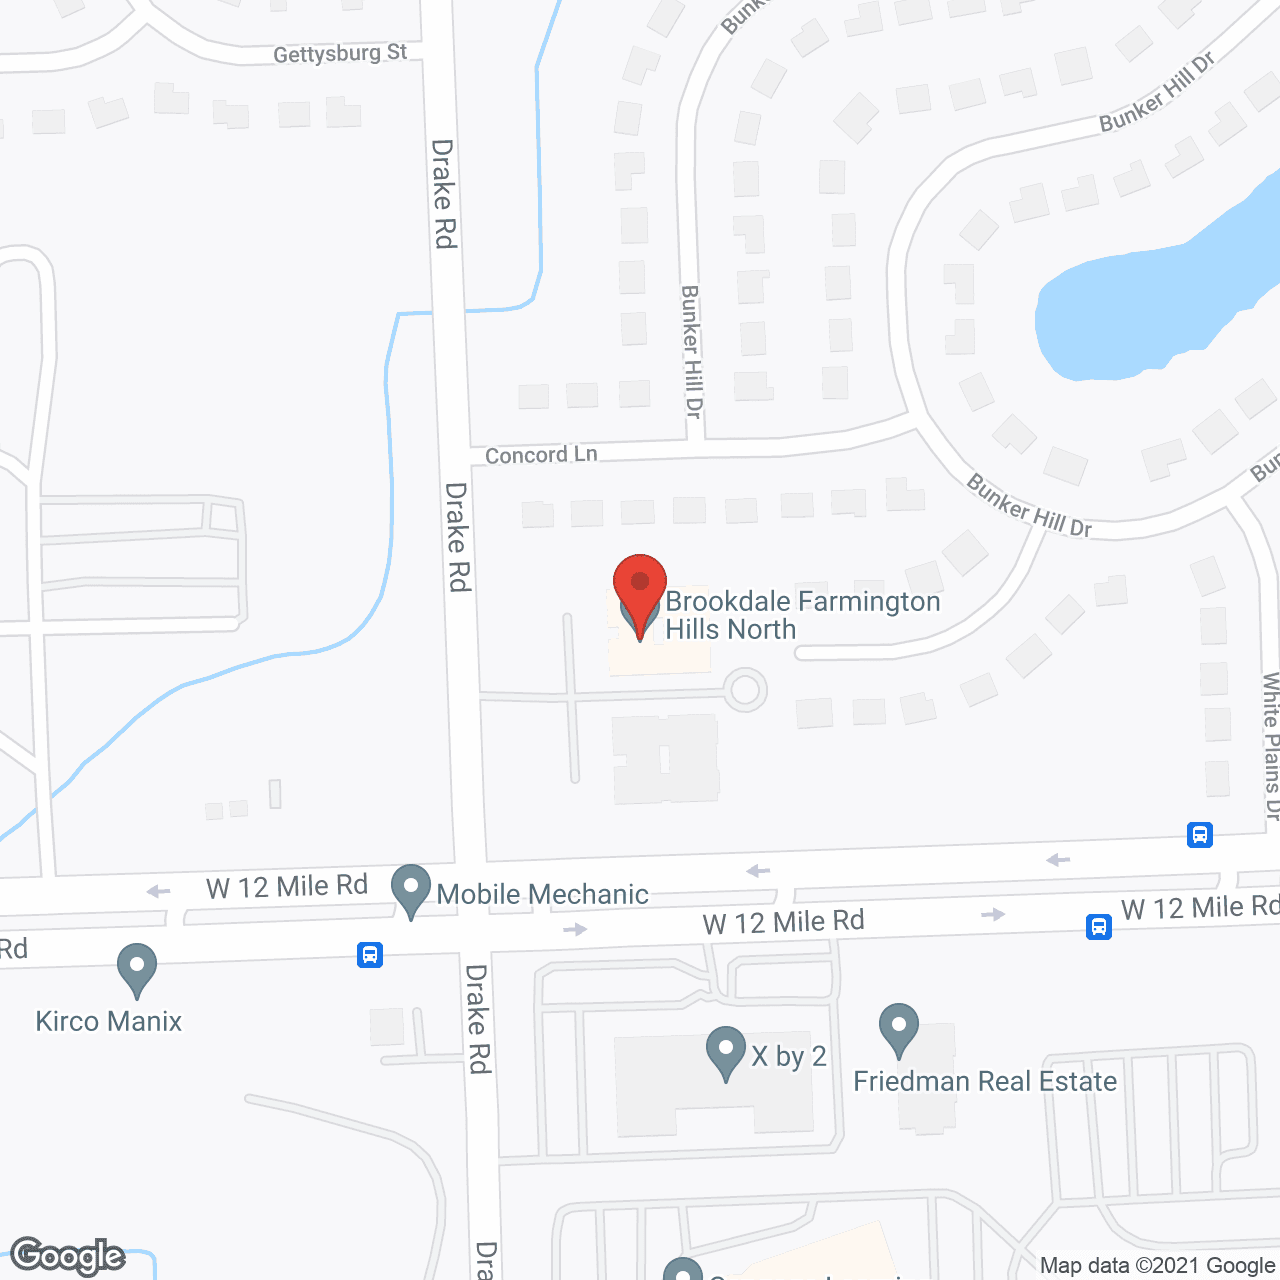 Brookdale Farmington Hills North in google map